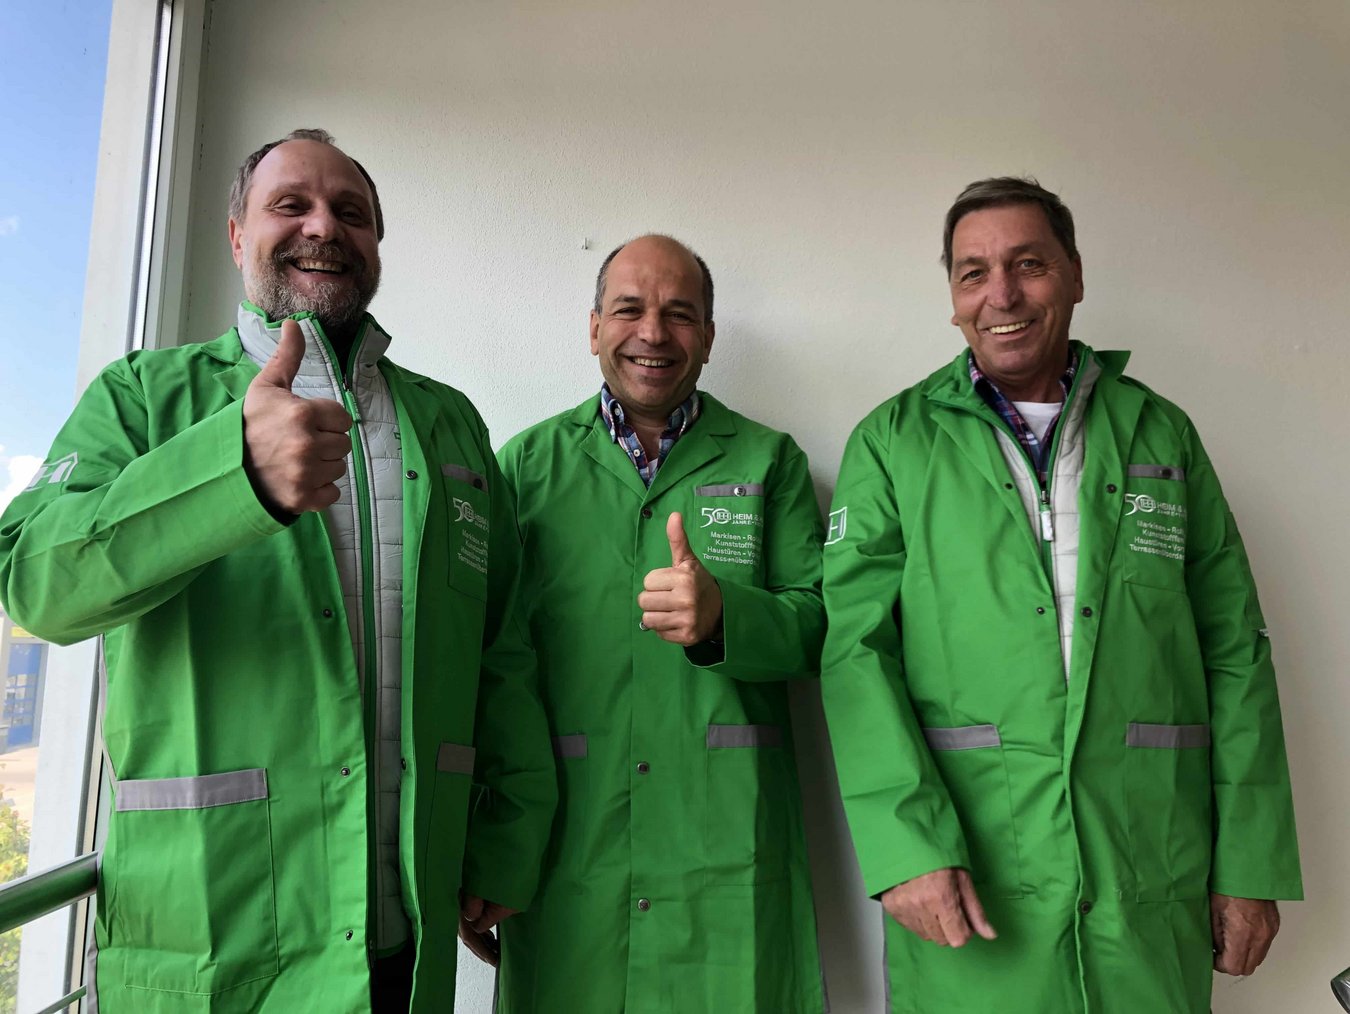 Drei HEIM & HAUS Fachberater aus der Verkaufsleitung Nürnberg mit grünen HEIM & HAUS Kitteln